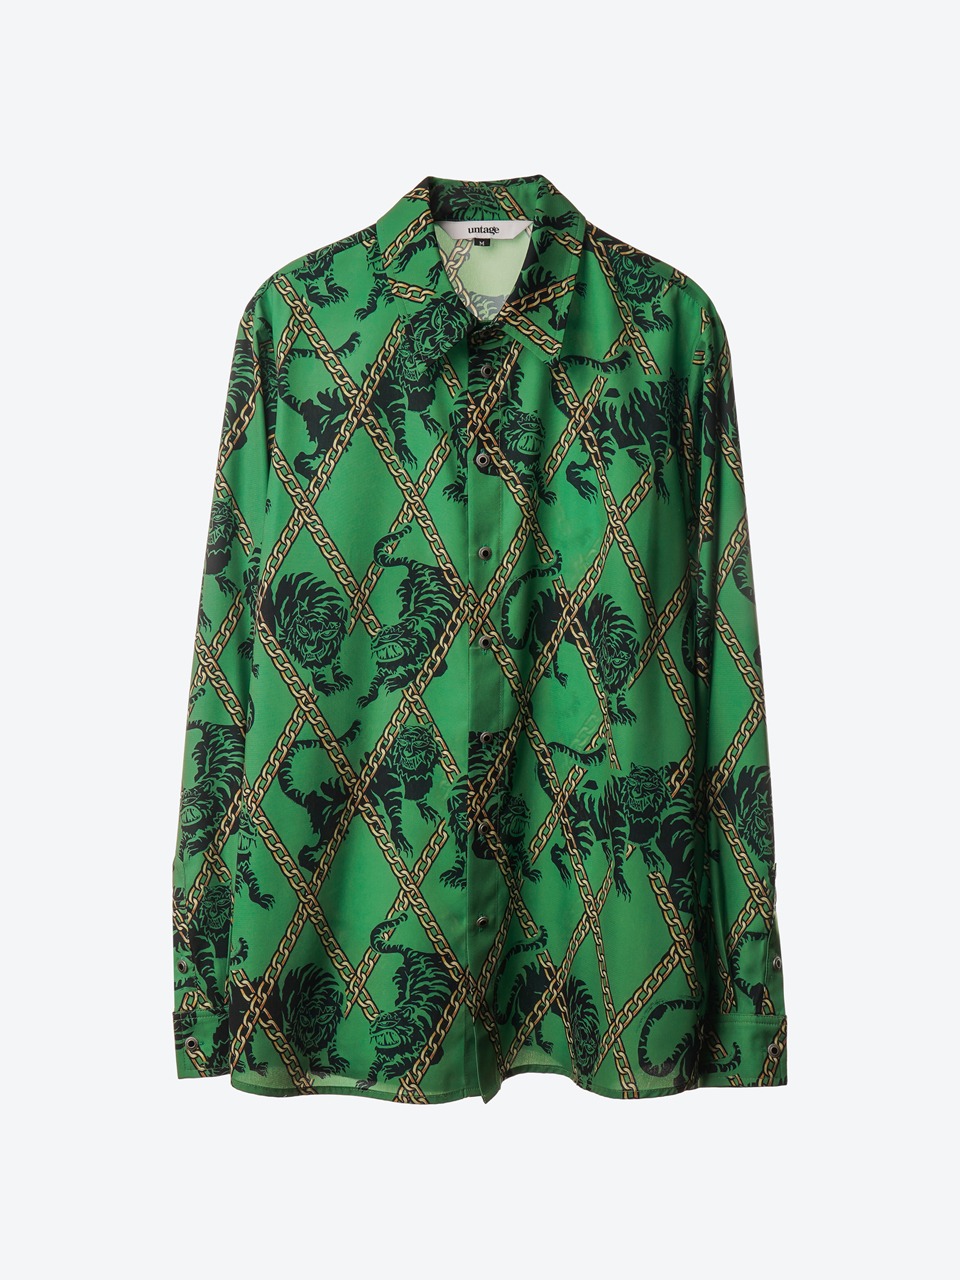 Tiger-Print Shirt (green)